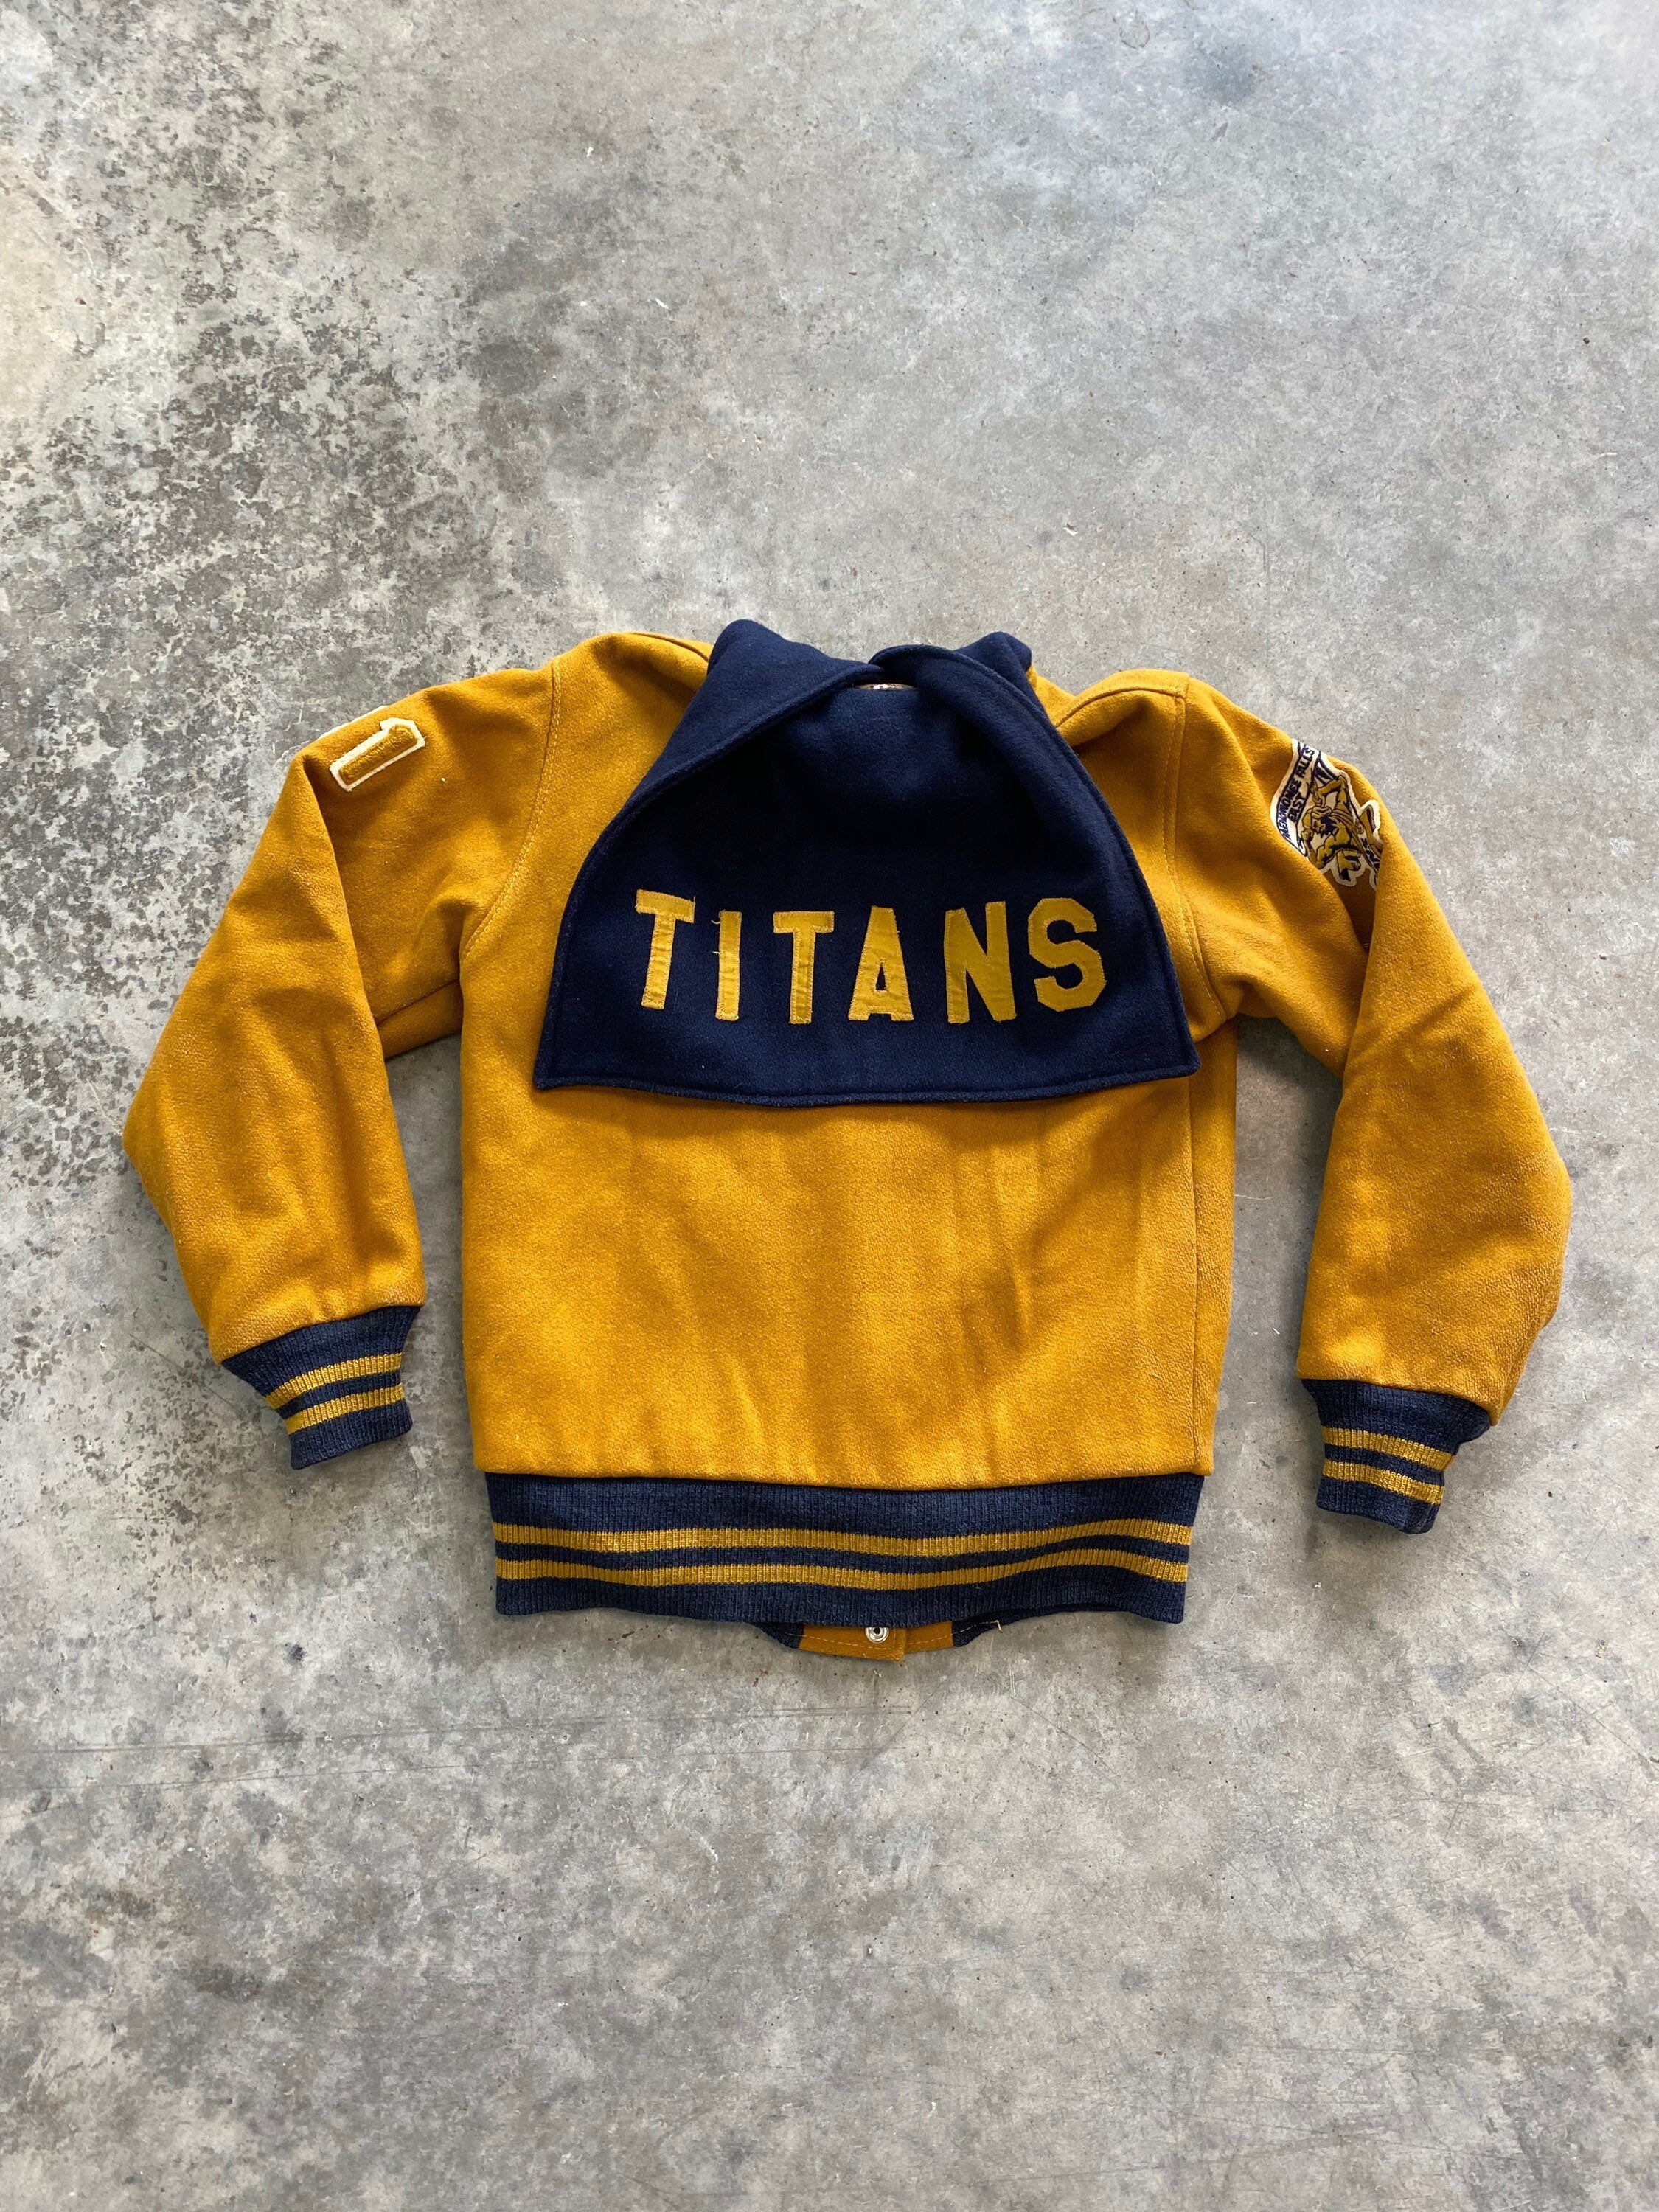 Vintage Ripon Award Menomonee Falls Titans Varsity Jacket Size Medium